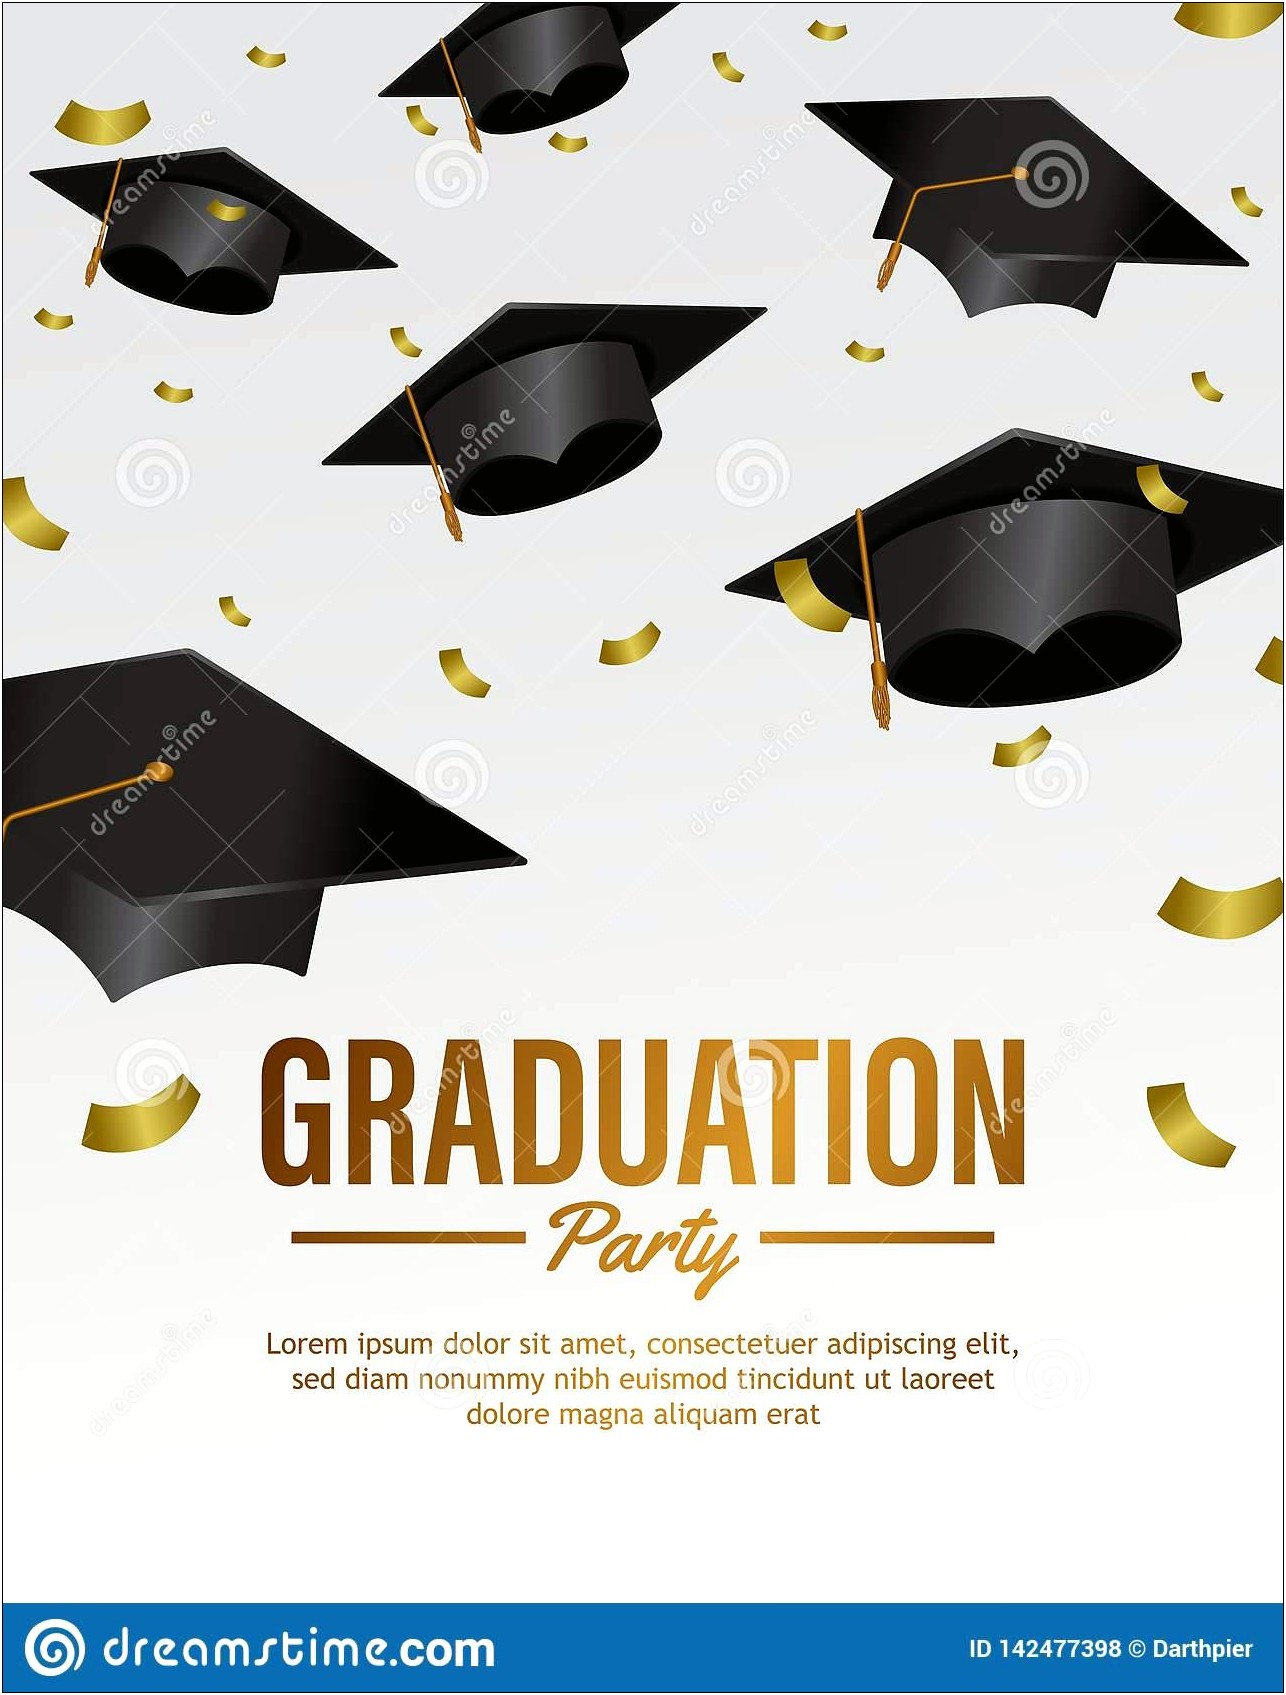 Graduation Party Invitation Postcard Templates Free